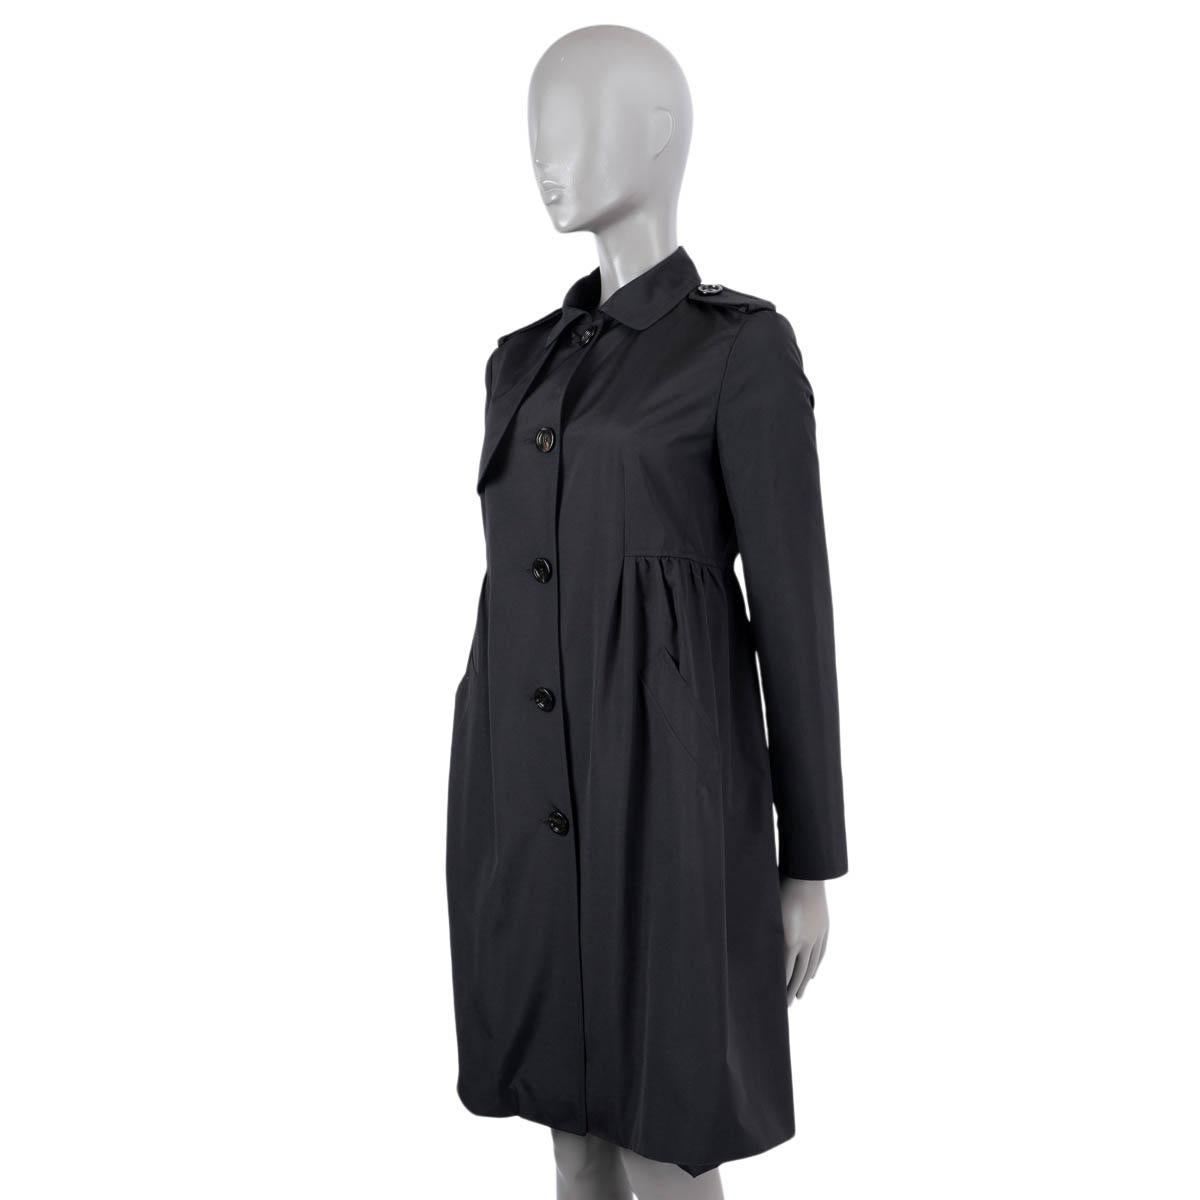 Black CHRISTIAN DIOR black silk TRENCH Coat Jacket 38 S